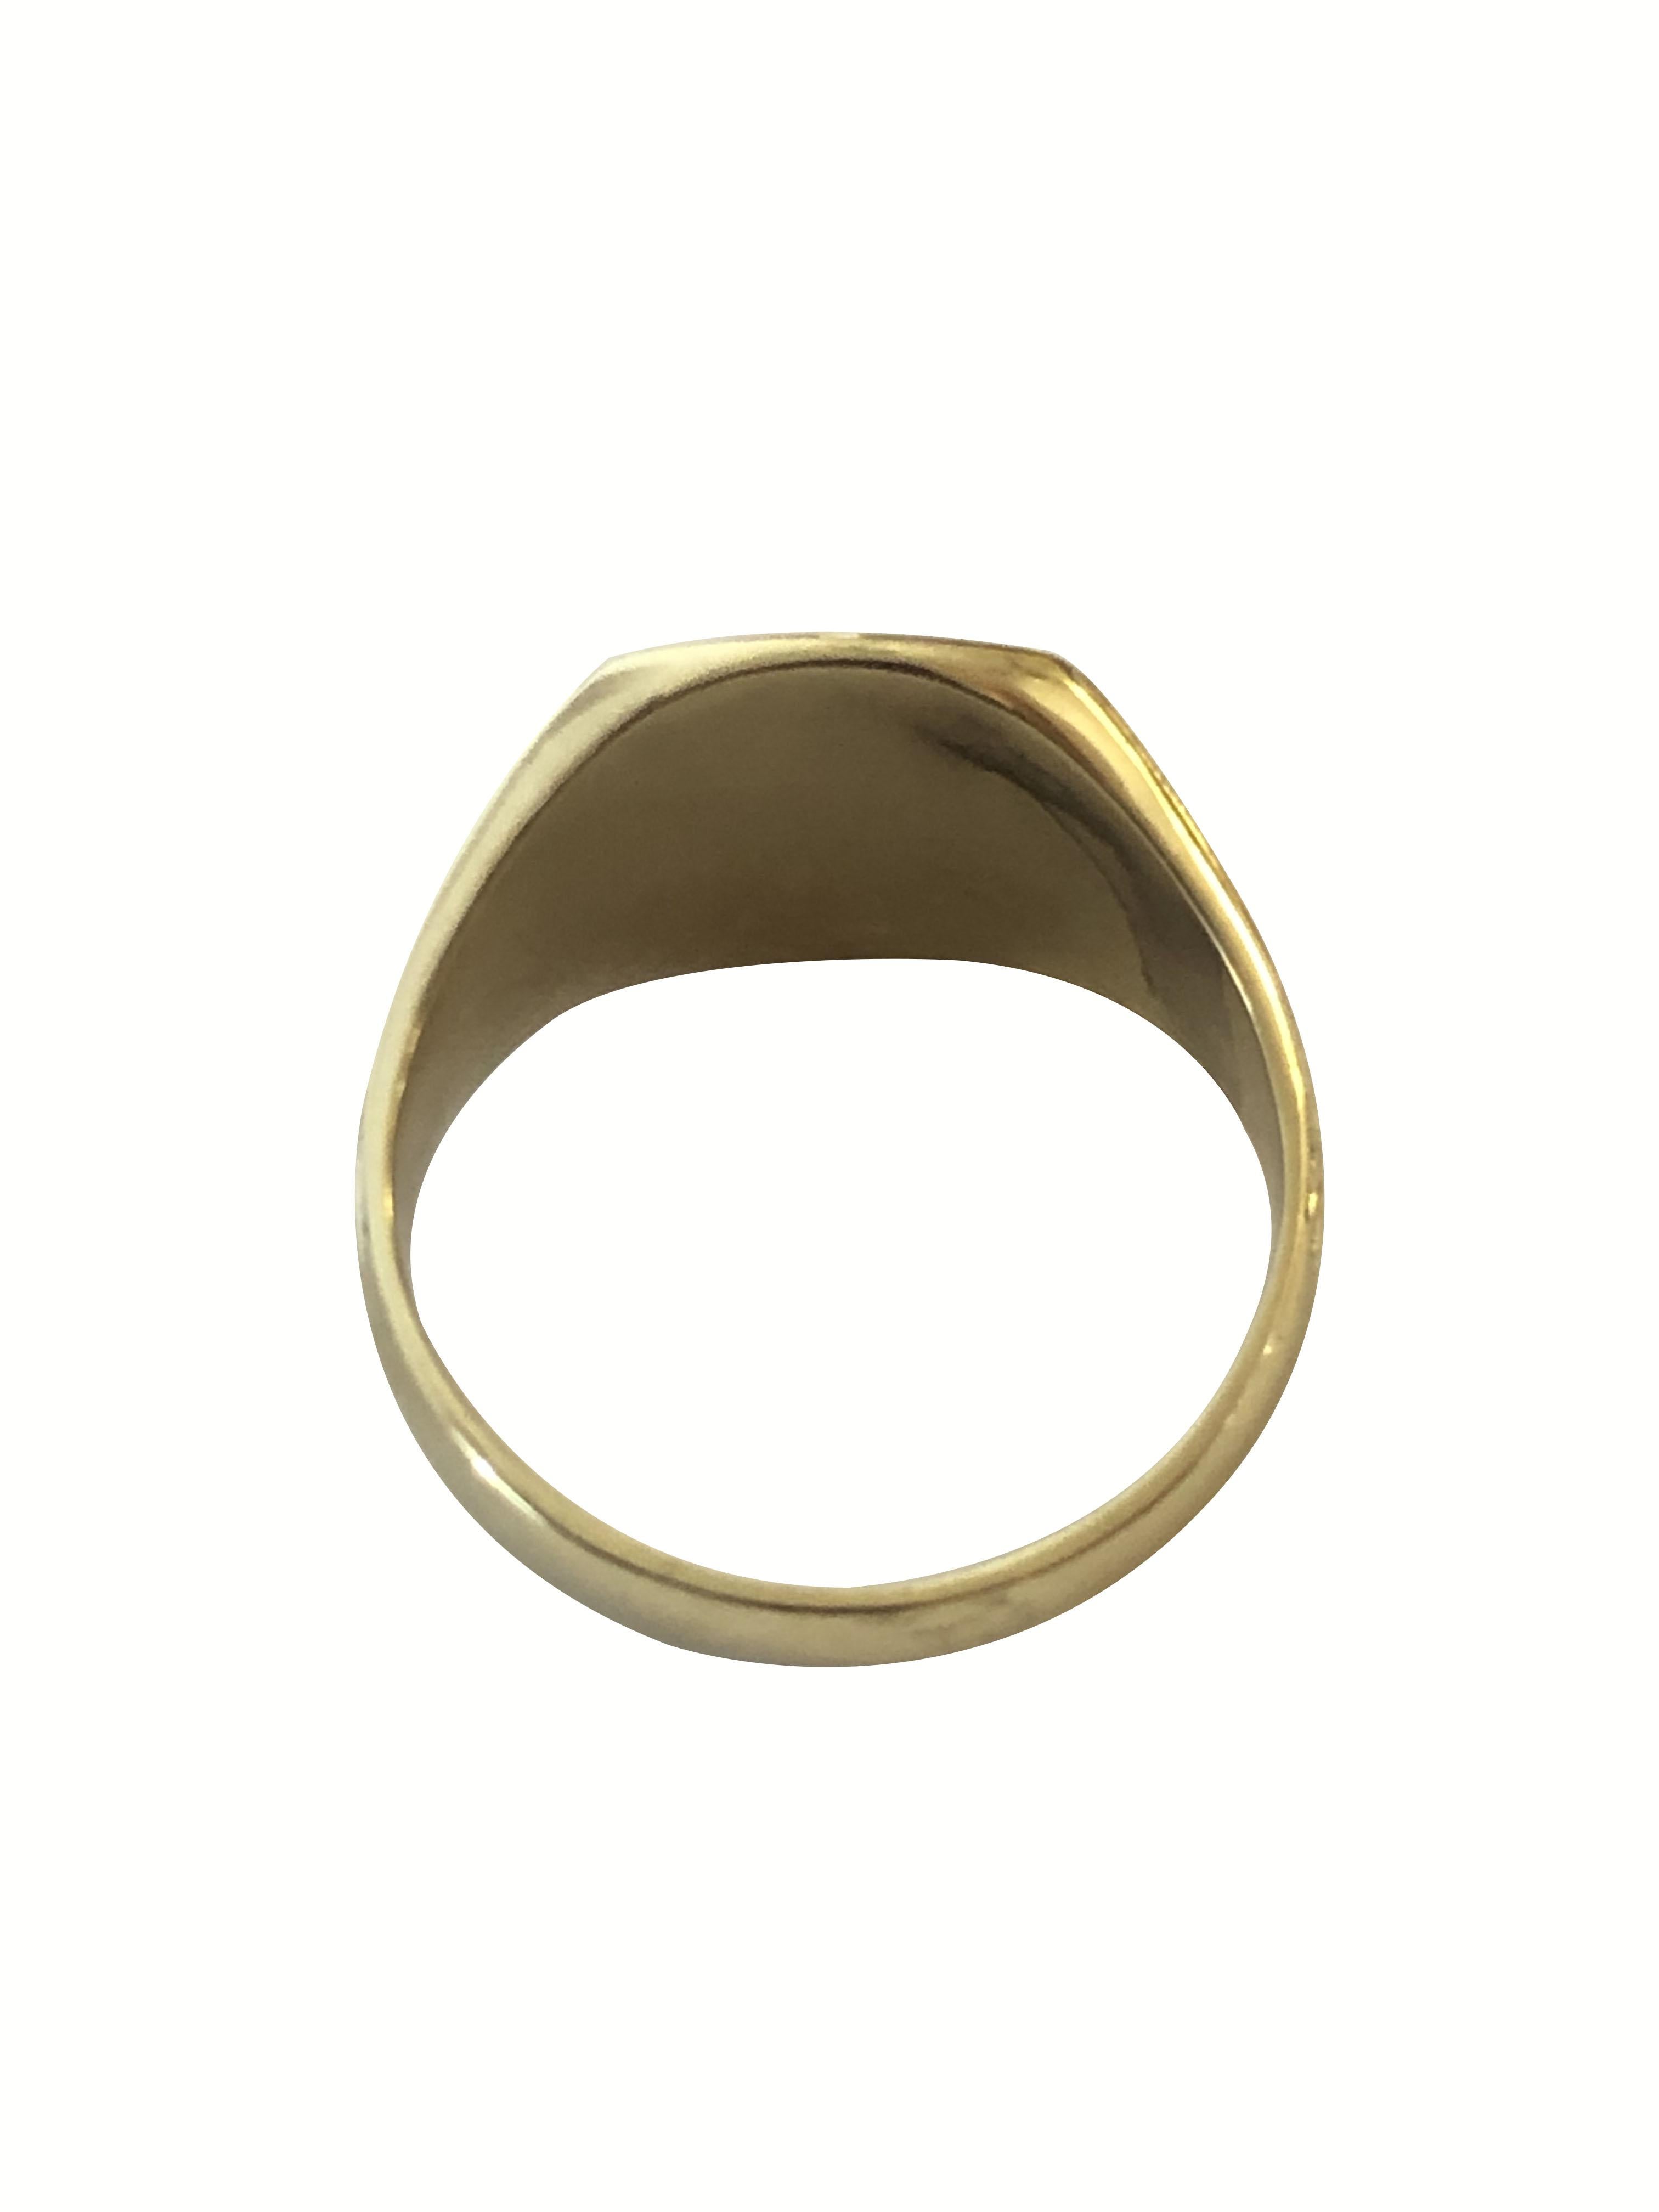 Women's or Men's Antique Yellow Gold Signet Ring